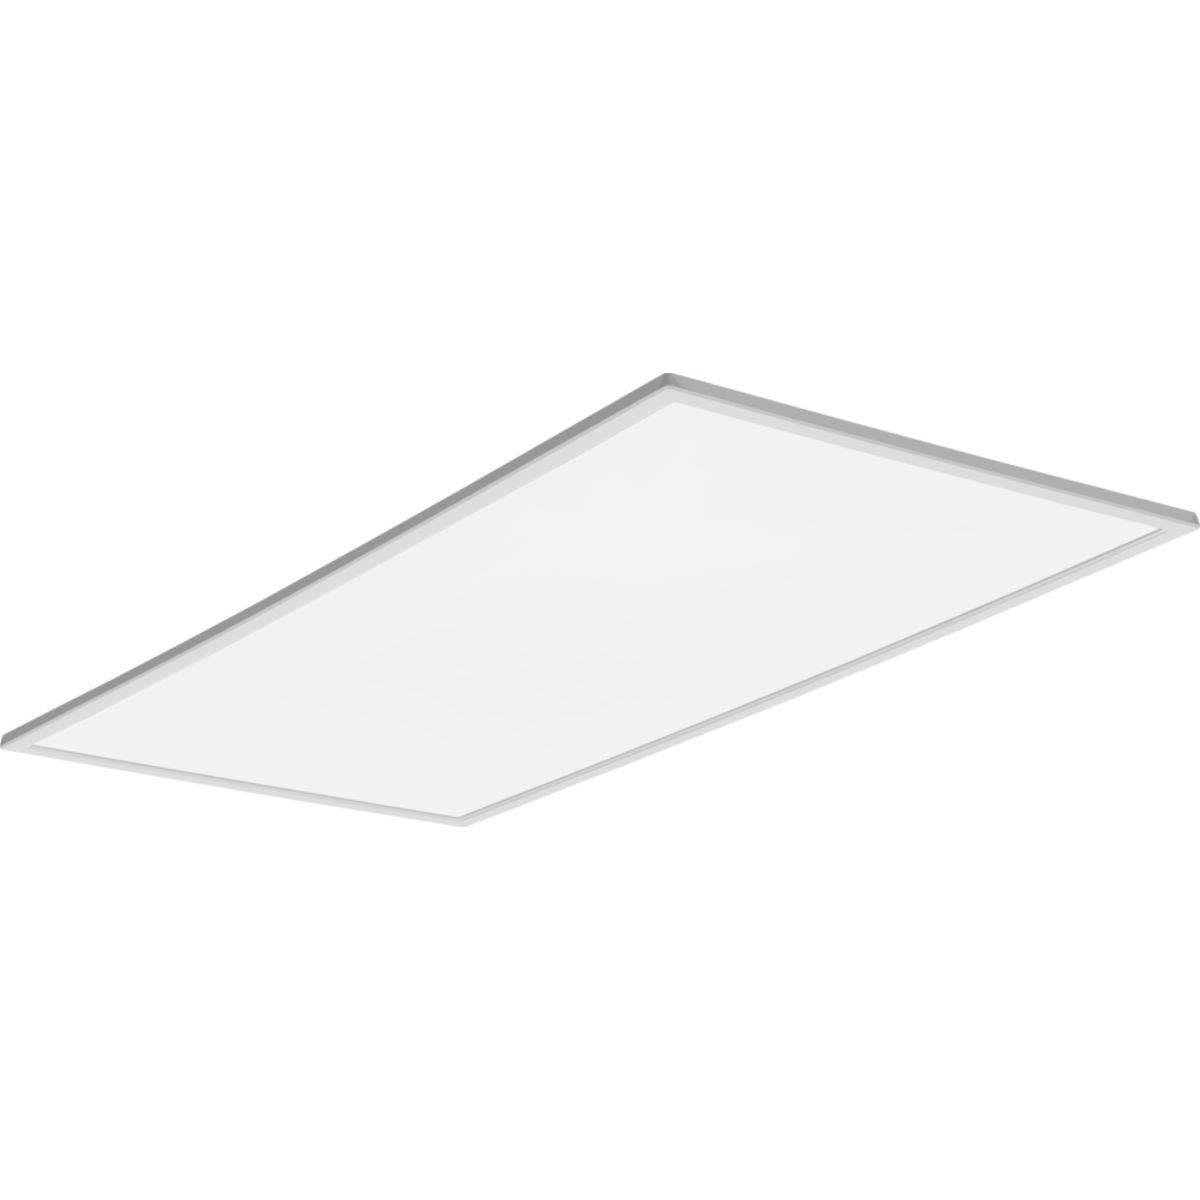 2x4 LED Panel Troffer Light